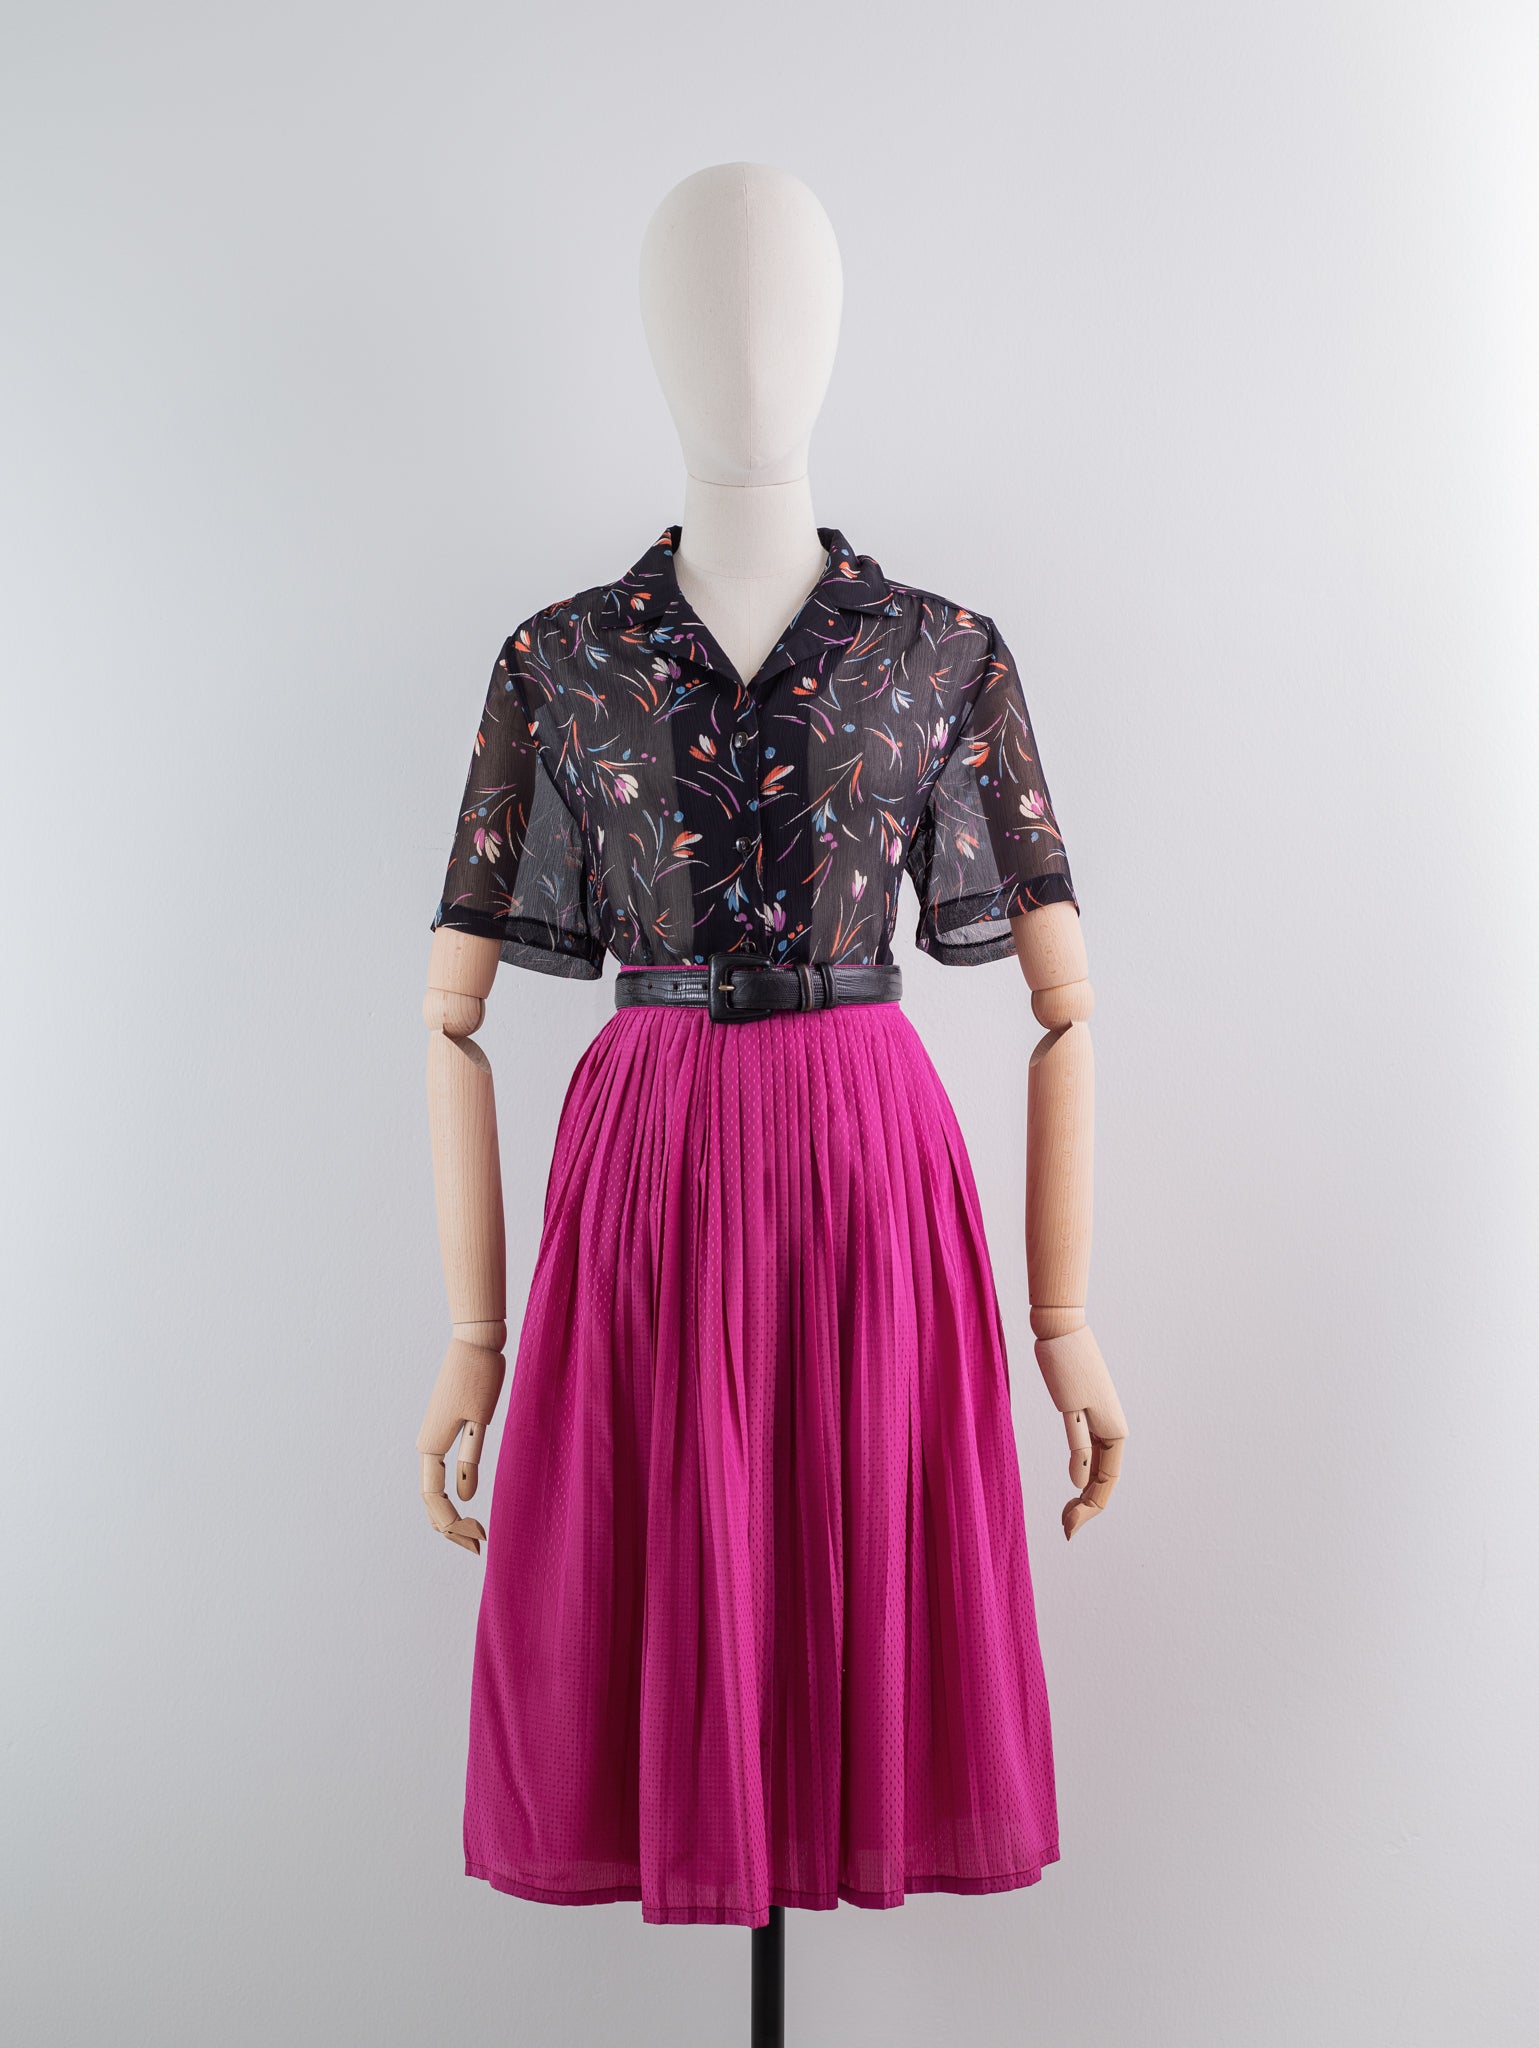 Floral chiffon vintage blouse